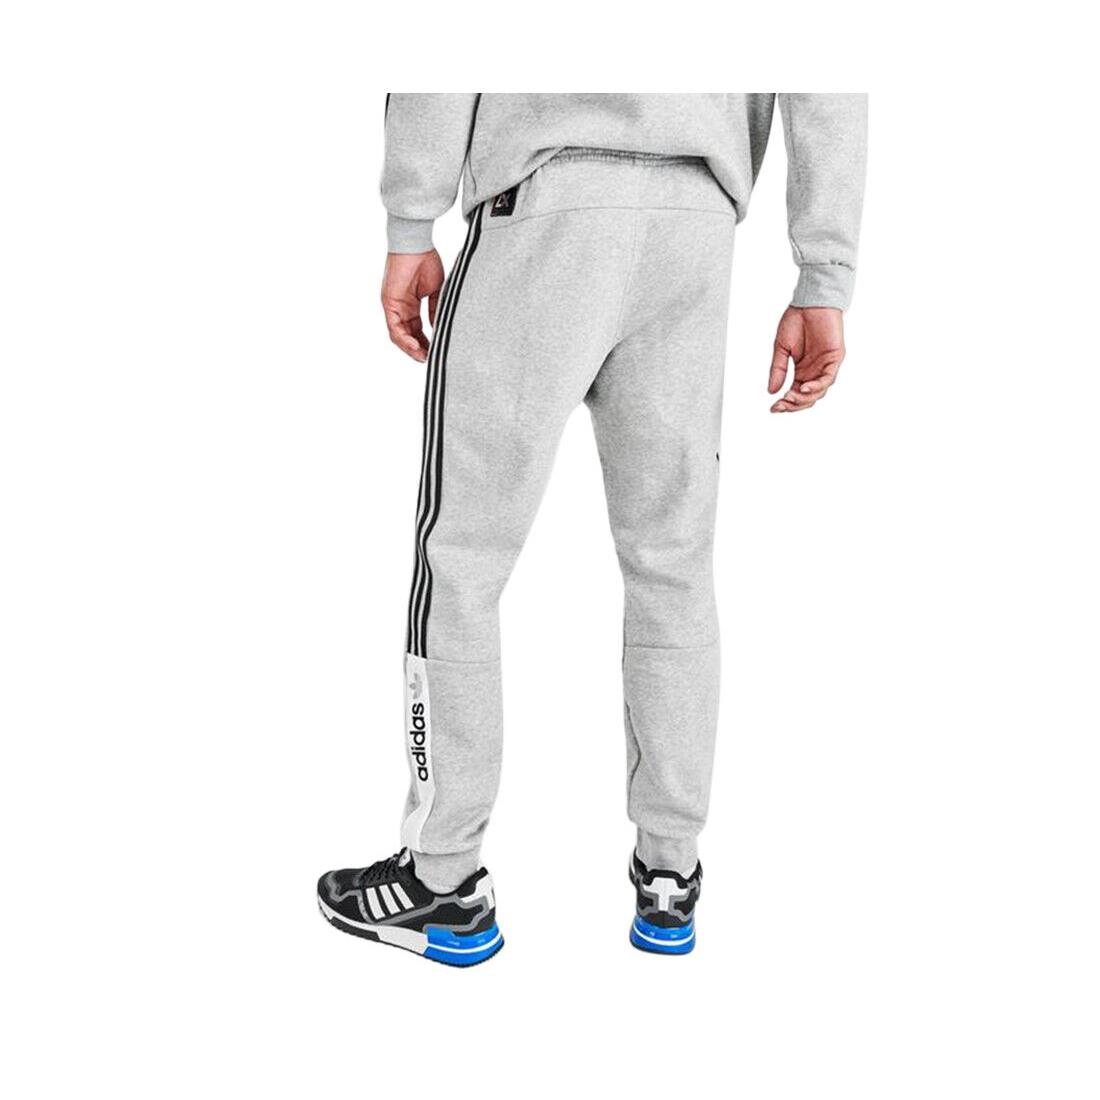 Adidas Originals Nutasca ZX Mens Active Pants Size Xxl Color: Grey/black